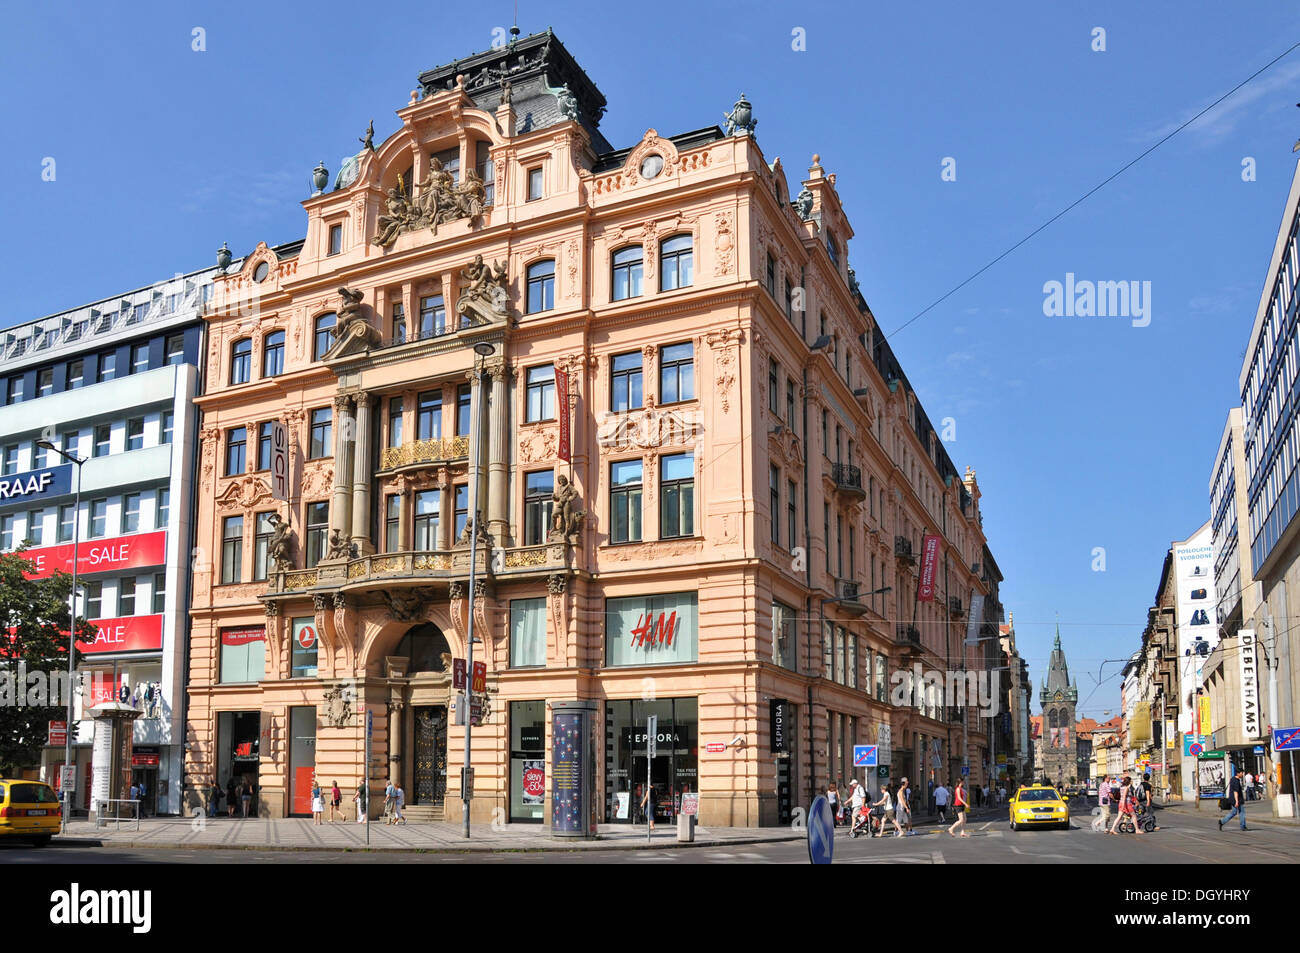 Wenceslas Square, Old Town, Prag, Tschechische Republik, Europa Stockfoto